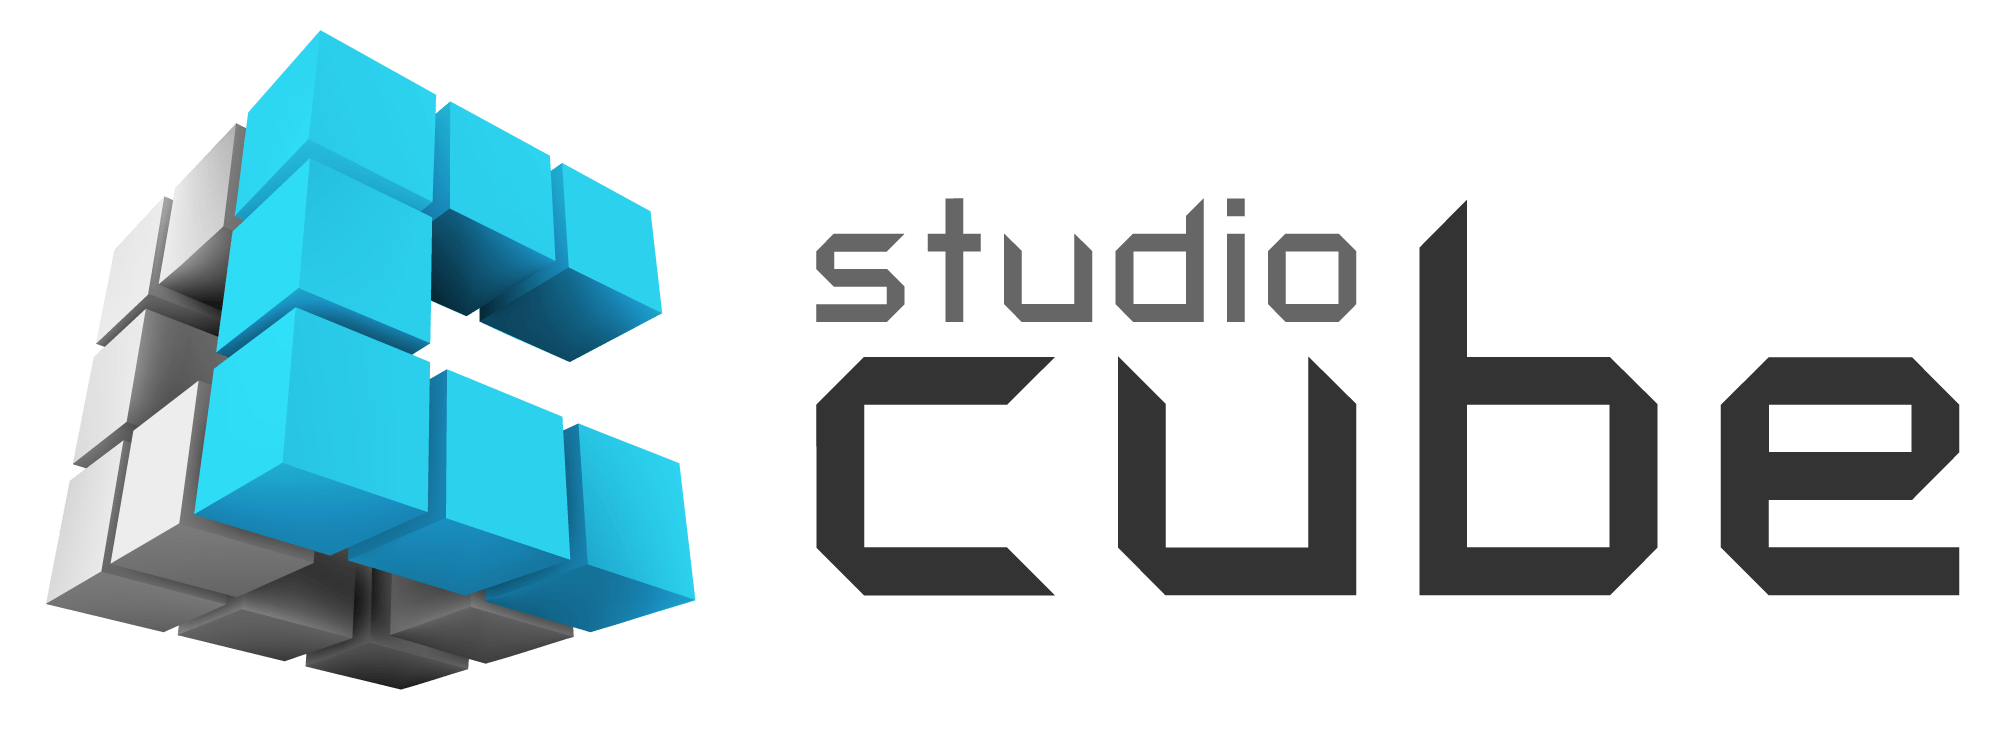 Компания cube. Cube логотип. Кубик Рубика логотип. It куб logo. Ше куб логотип.